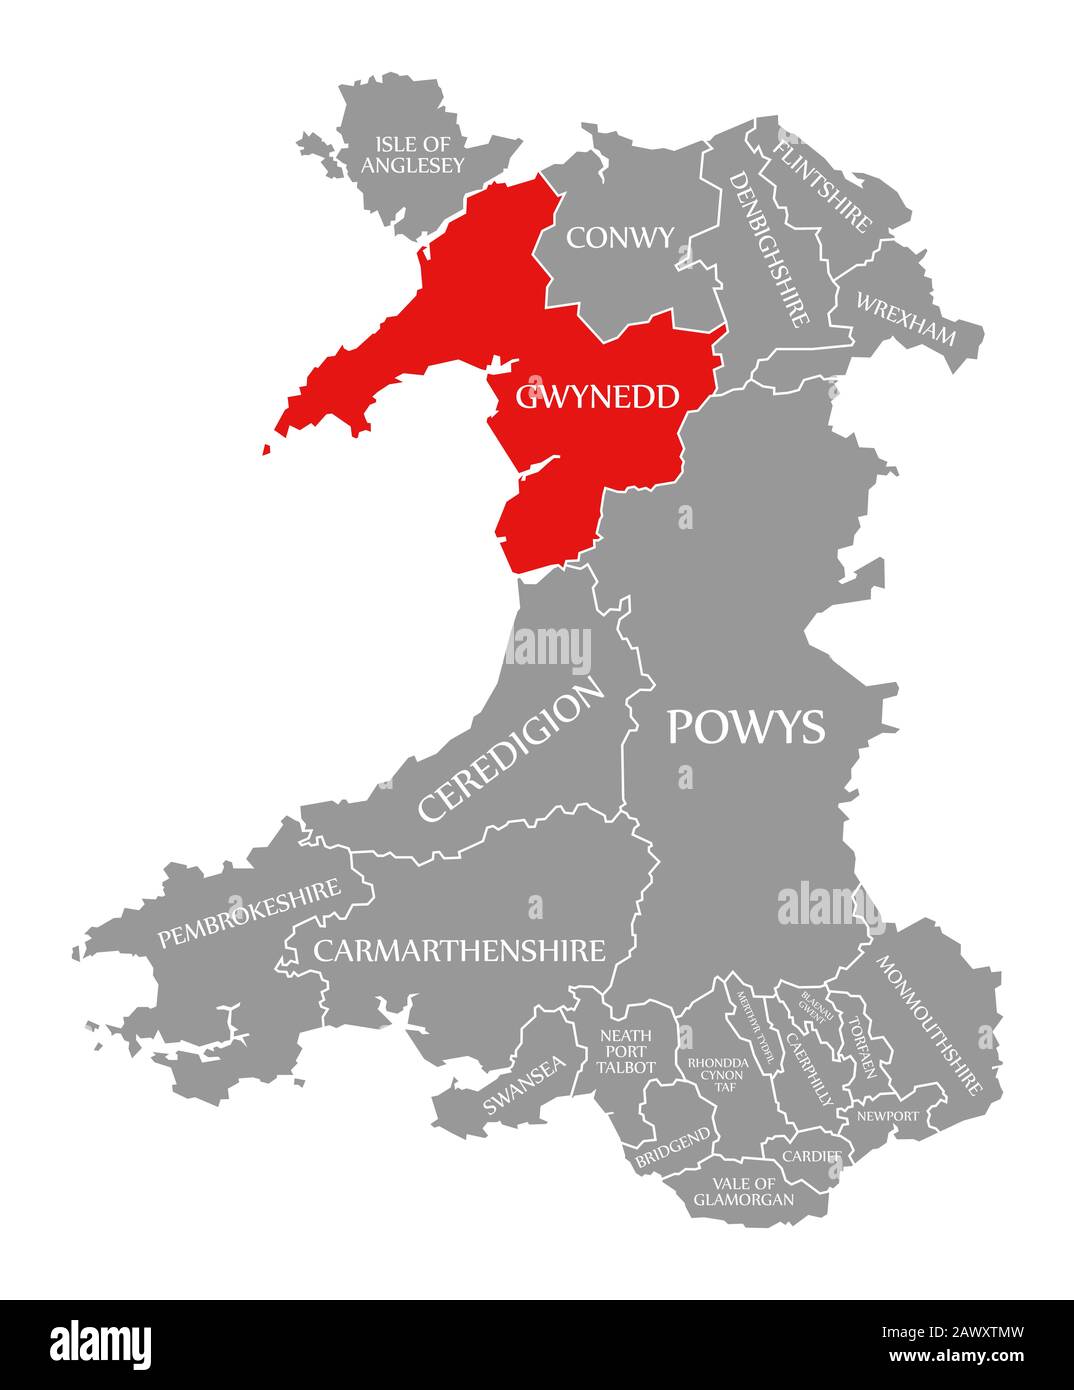 Gwynedd Red Highlighted In Map Of Wales 2AWXTMW 